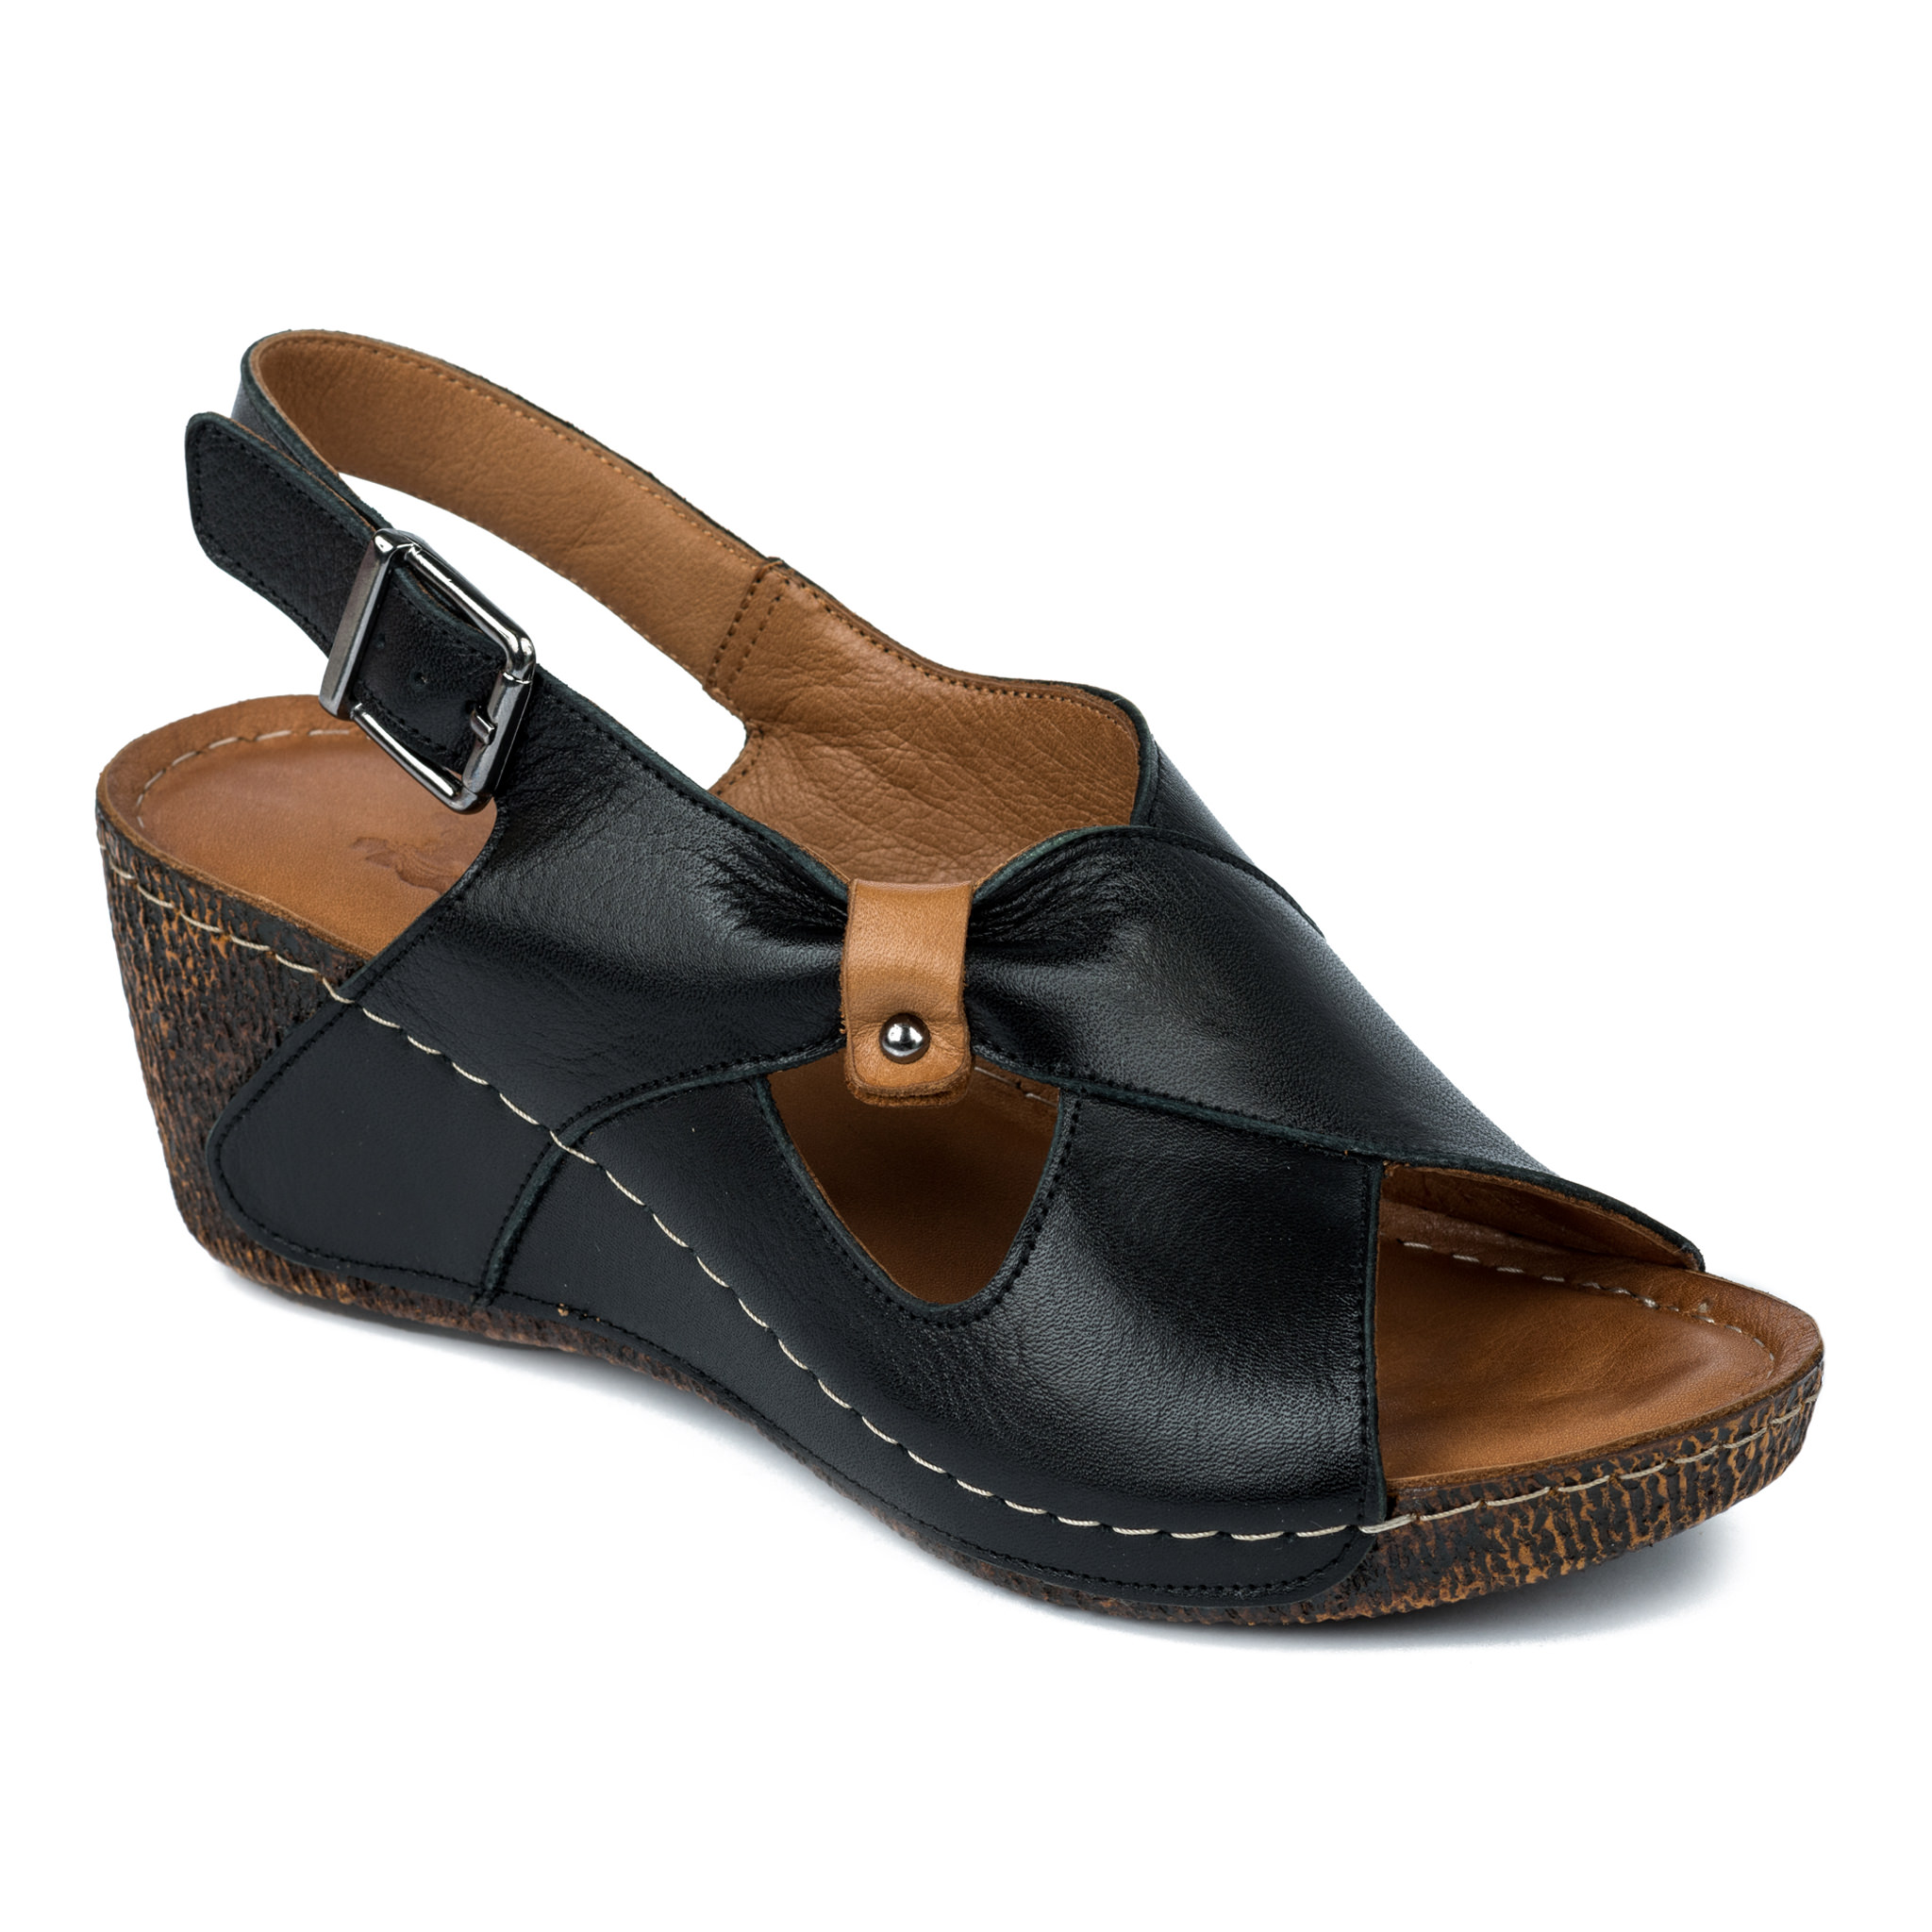 Women sandals A275 - BLACK